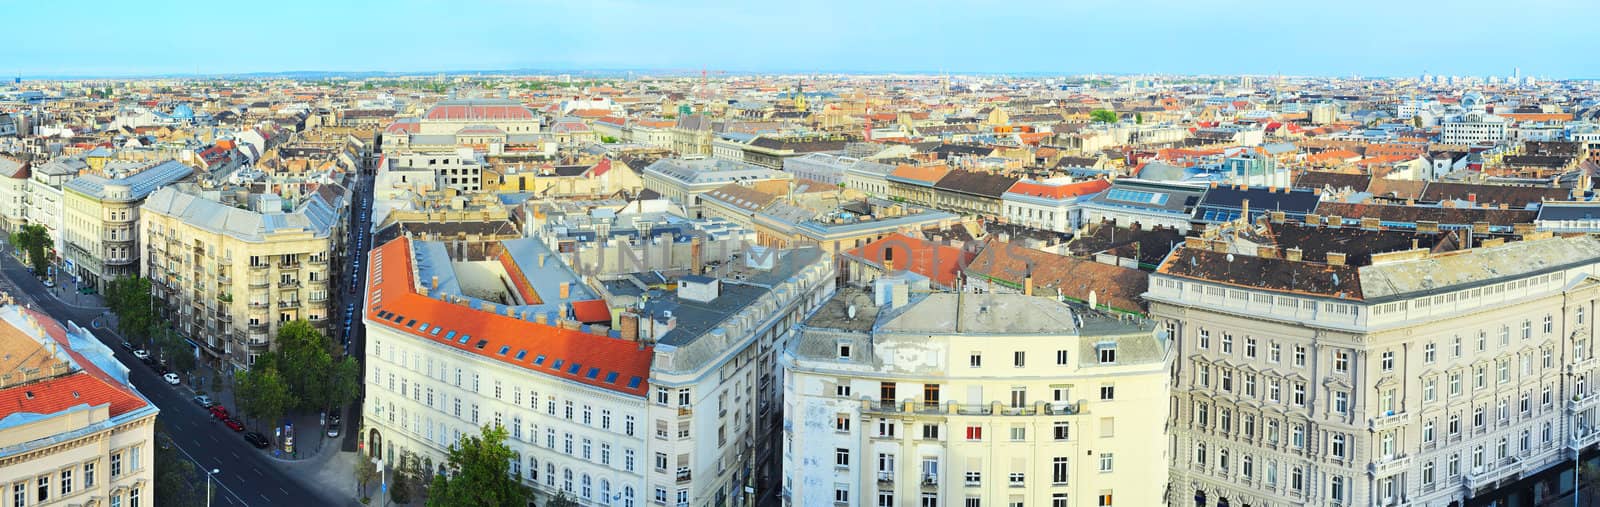 Budapest cityscape by joyfull